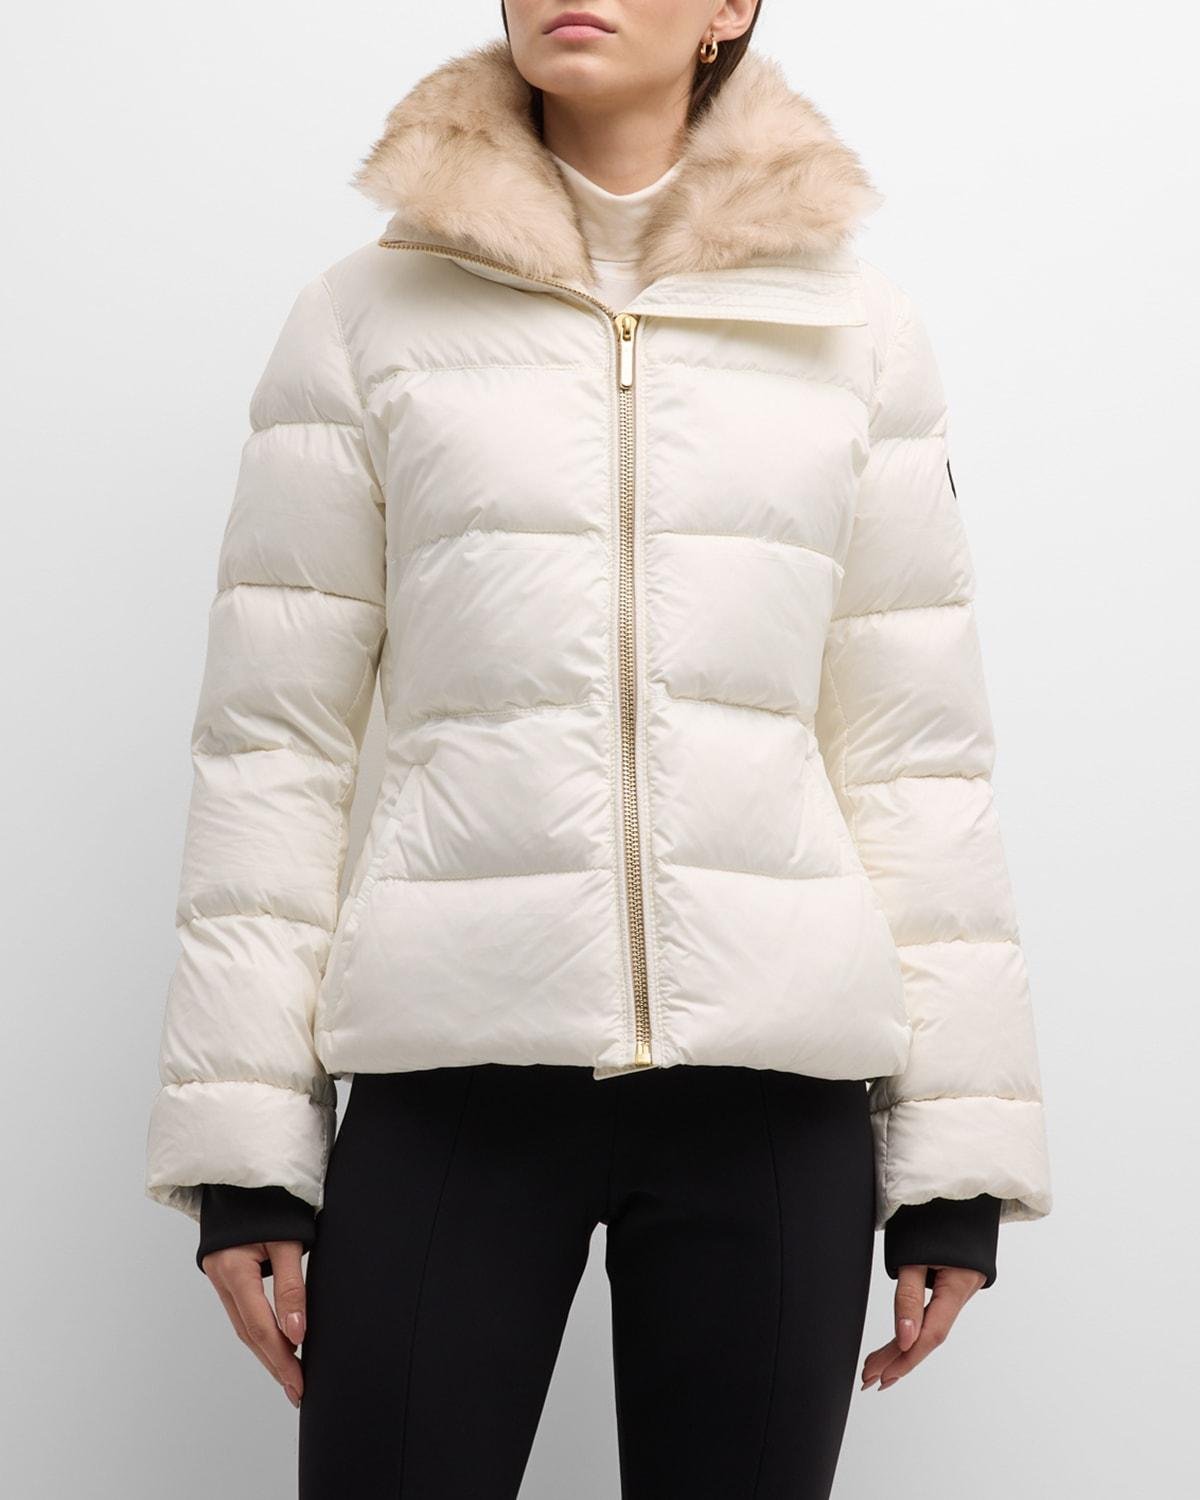 Apres-Ski Jacket With Detachable Toscana Lamb Collar by GORSKI